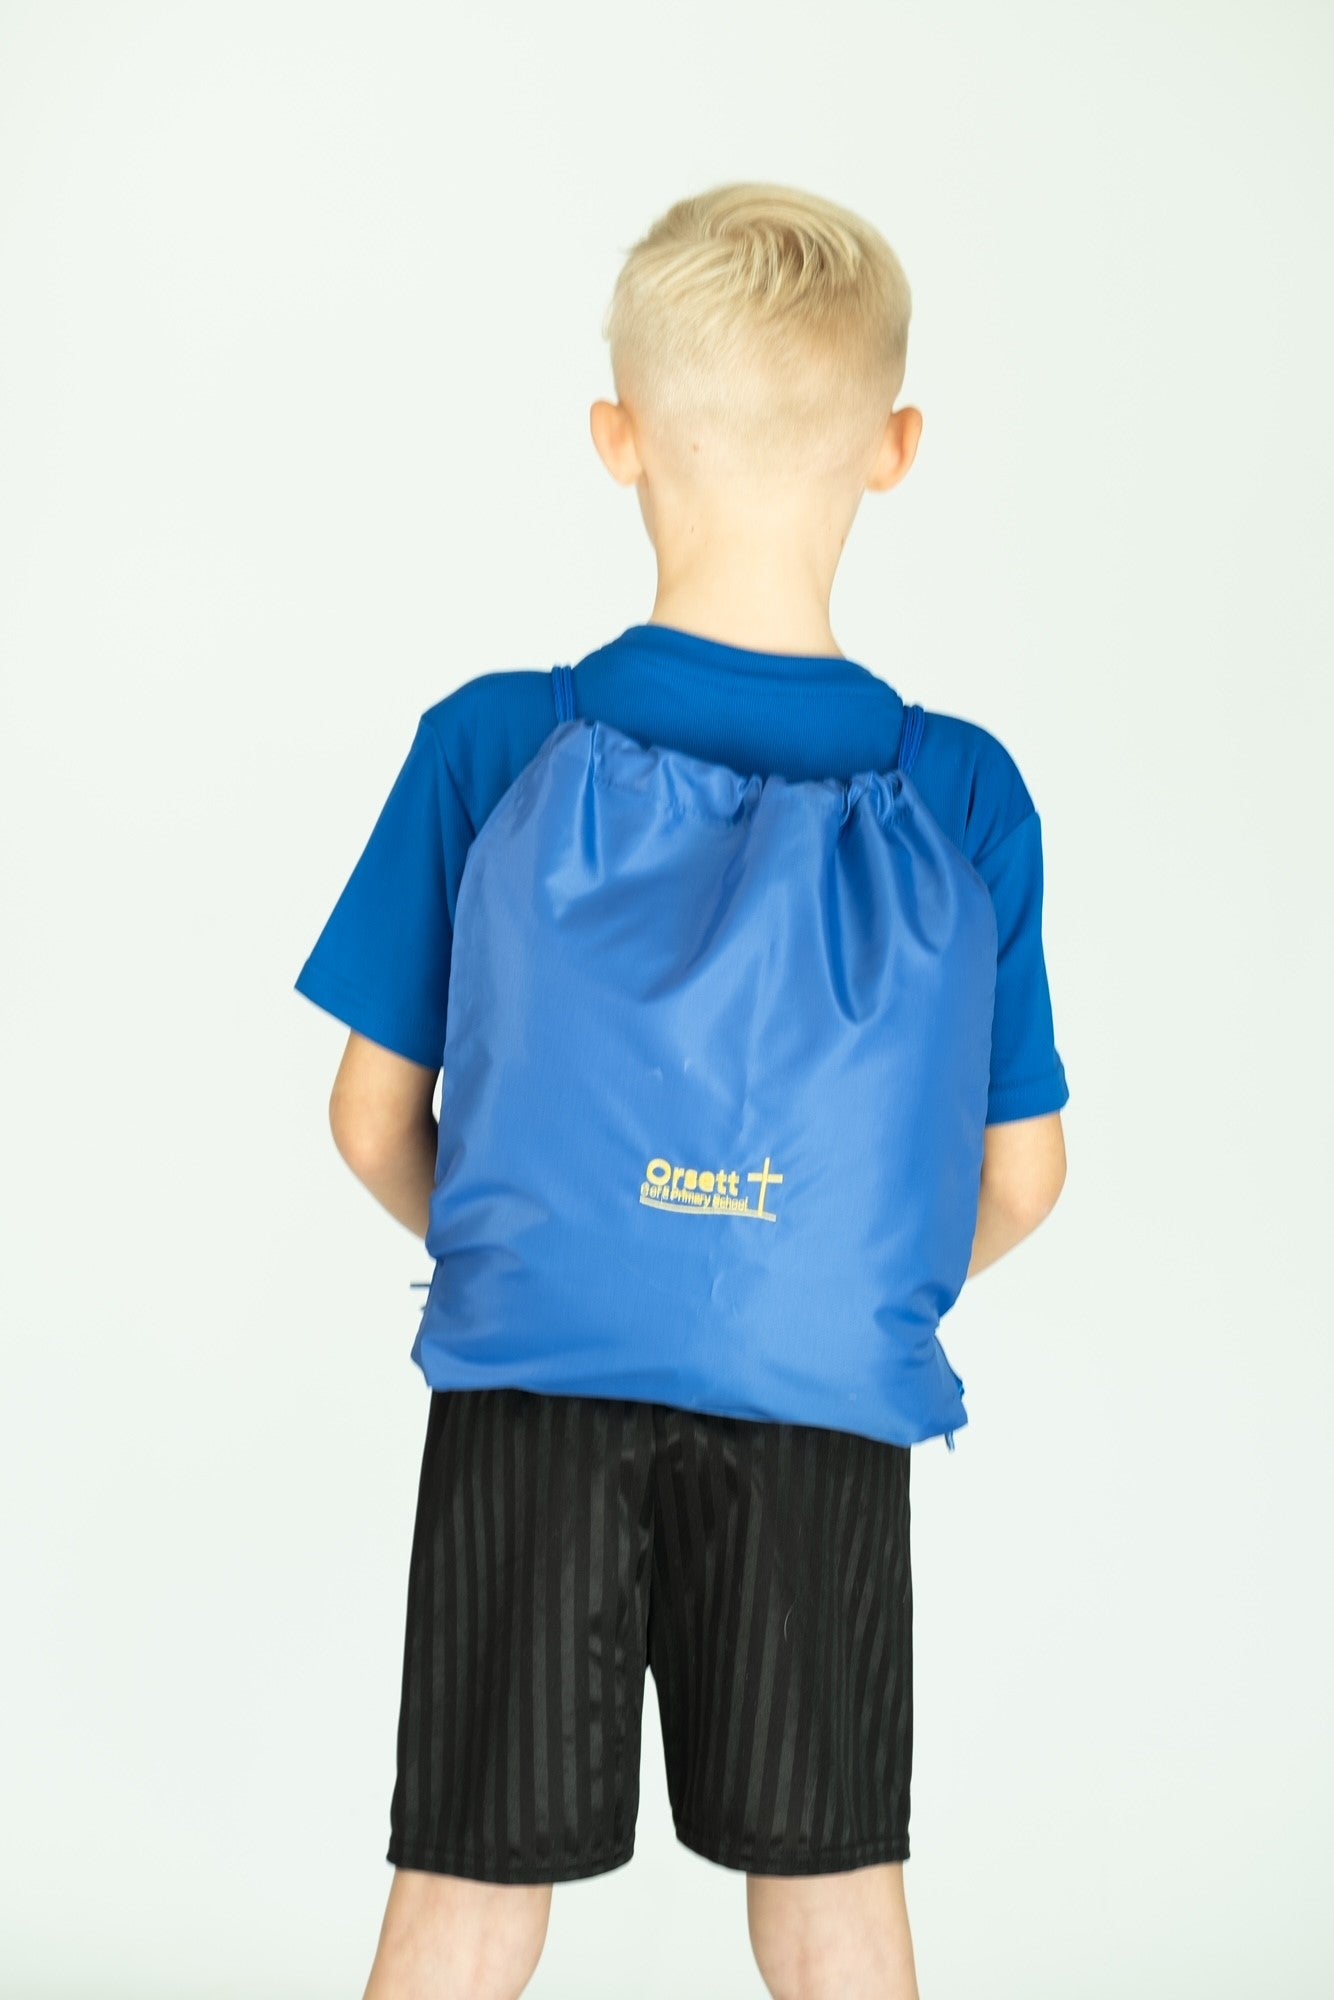 Orsett Primary PE Bag with Personalisation - Uniformwise Schoolwear